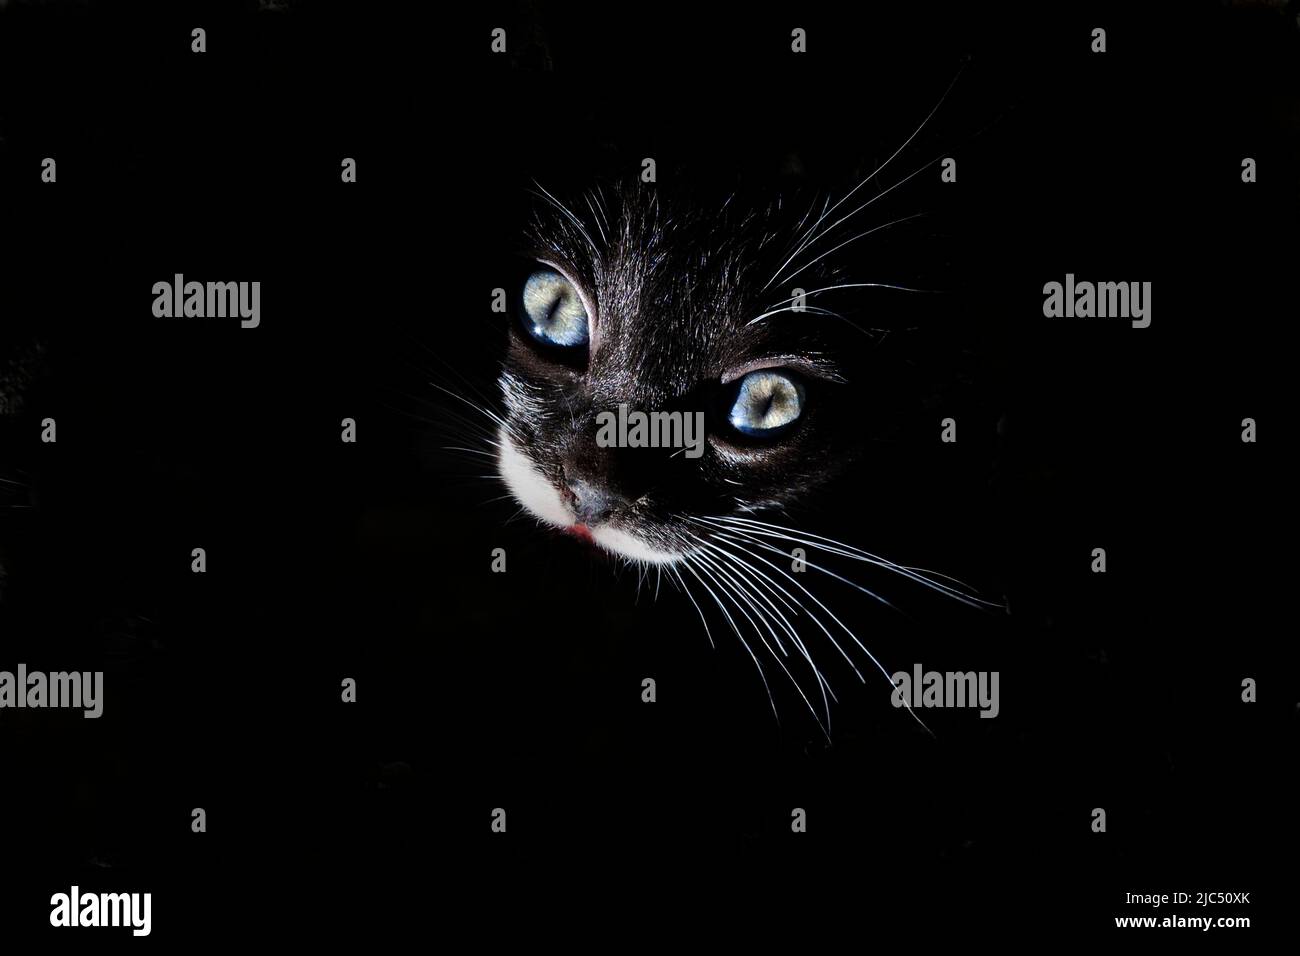 Kitten's face on black background. Stock Photo